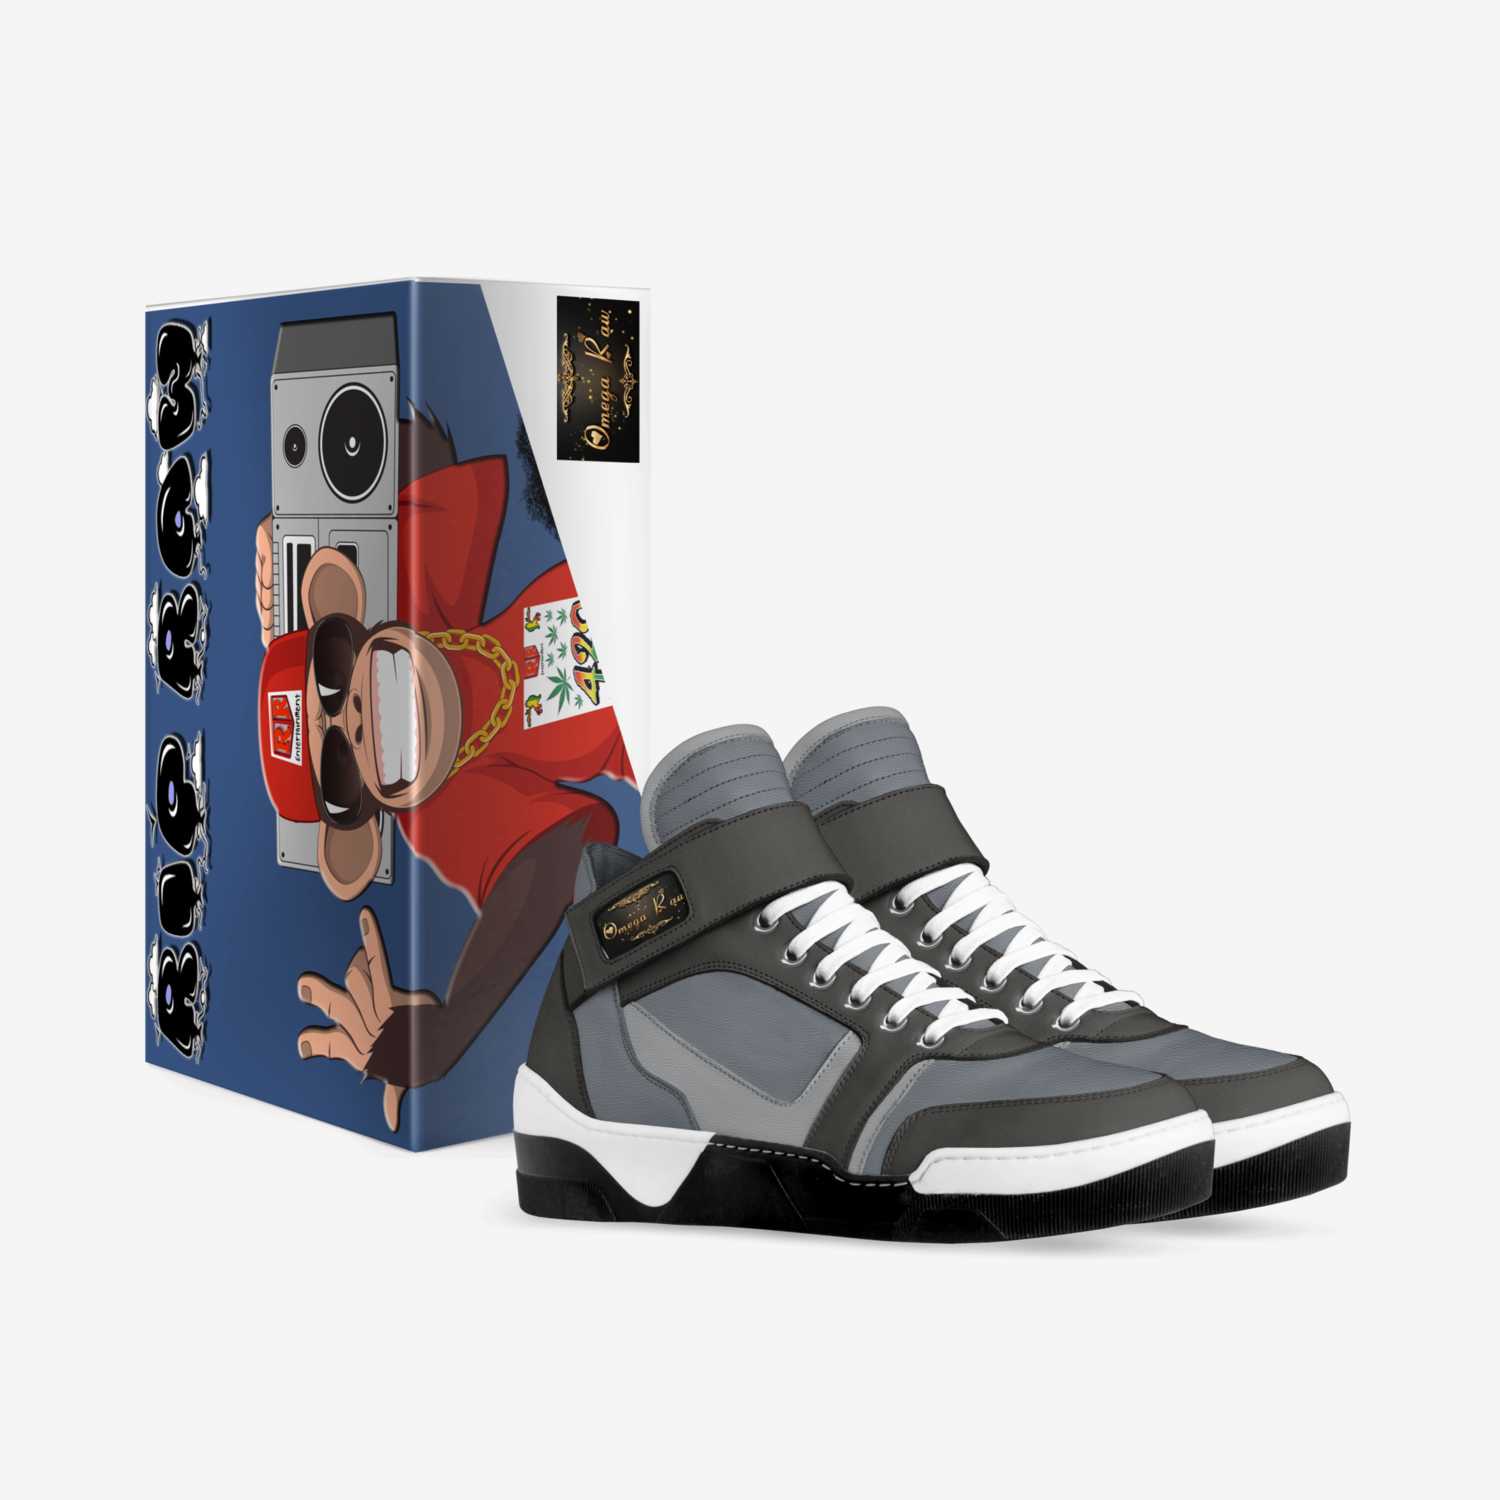 Omega Force 1 custom made in Italy shoes by Kharran Beacham | Box view